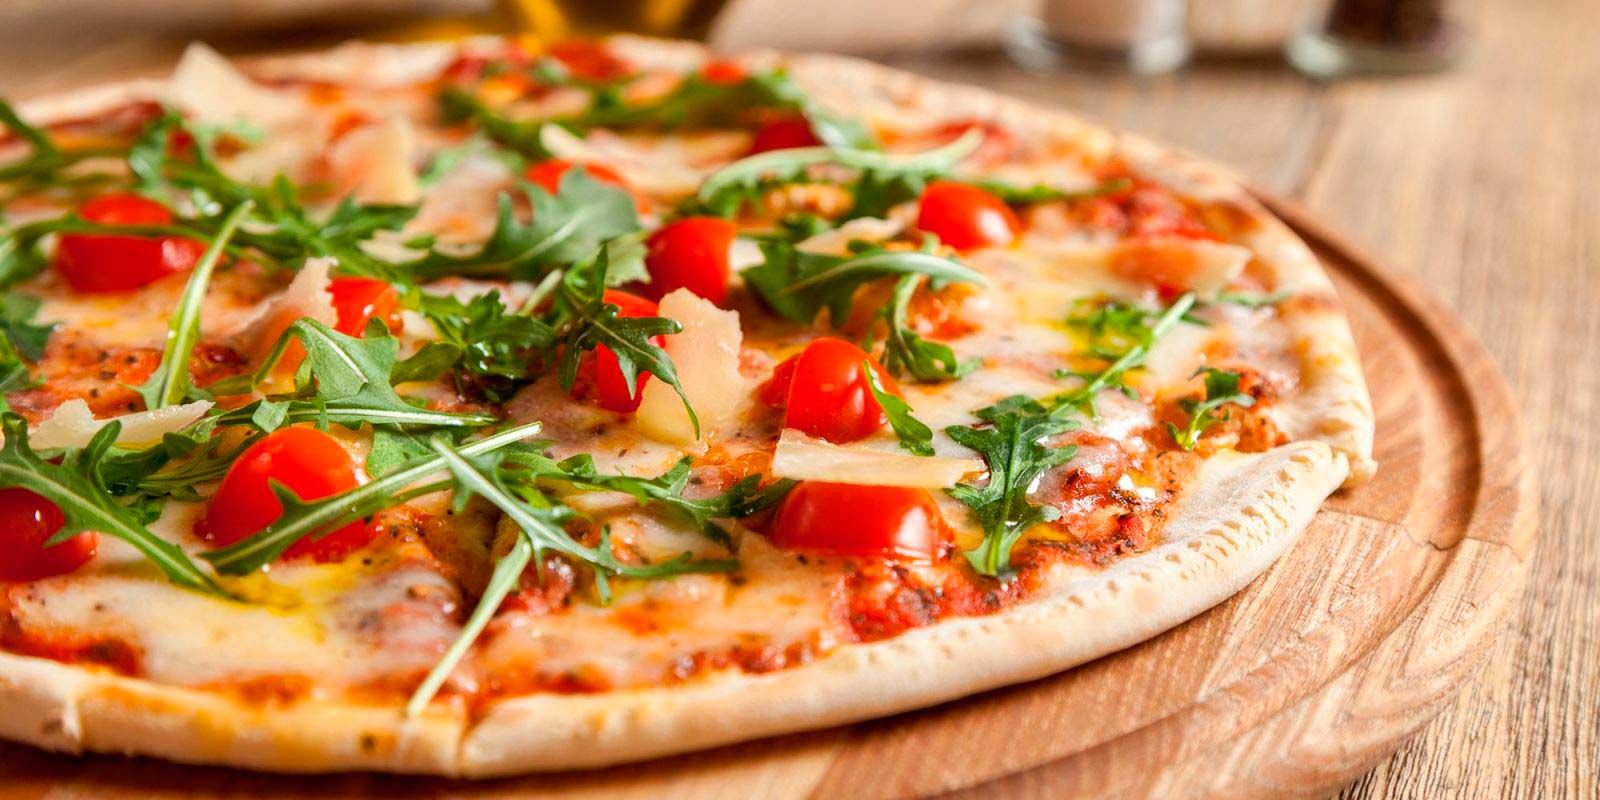 Pizza veganas, ¿son saludables?